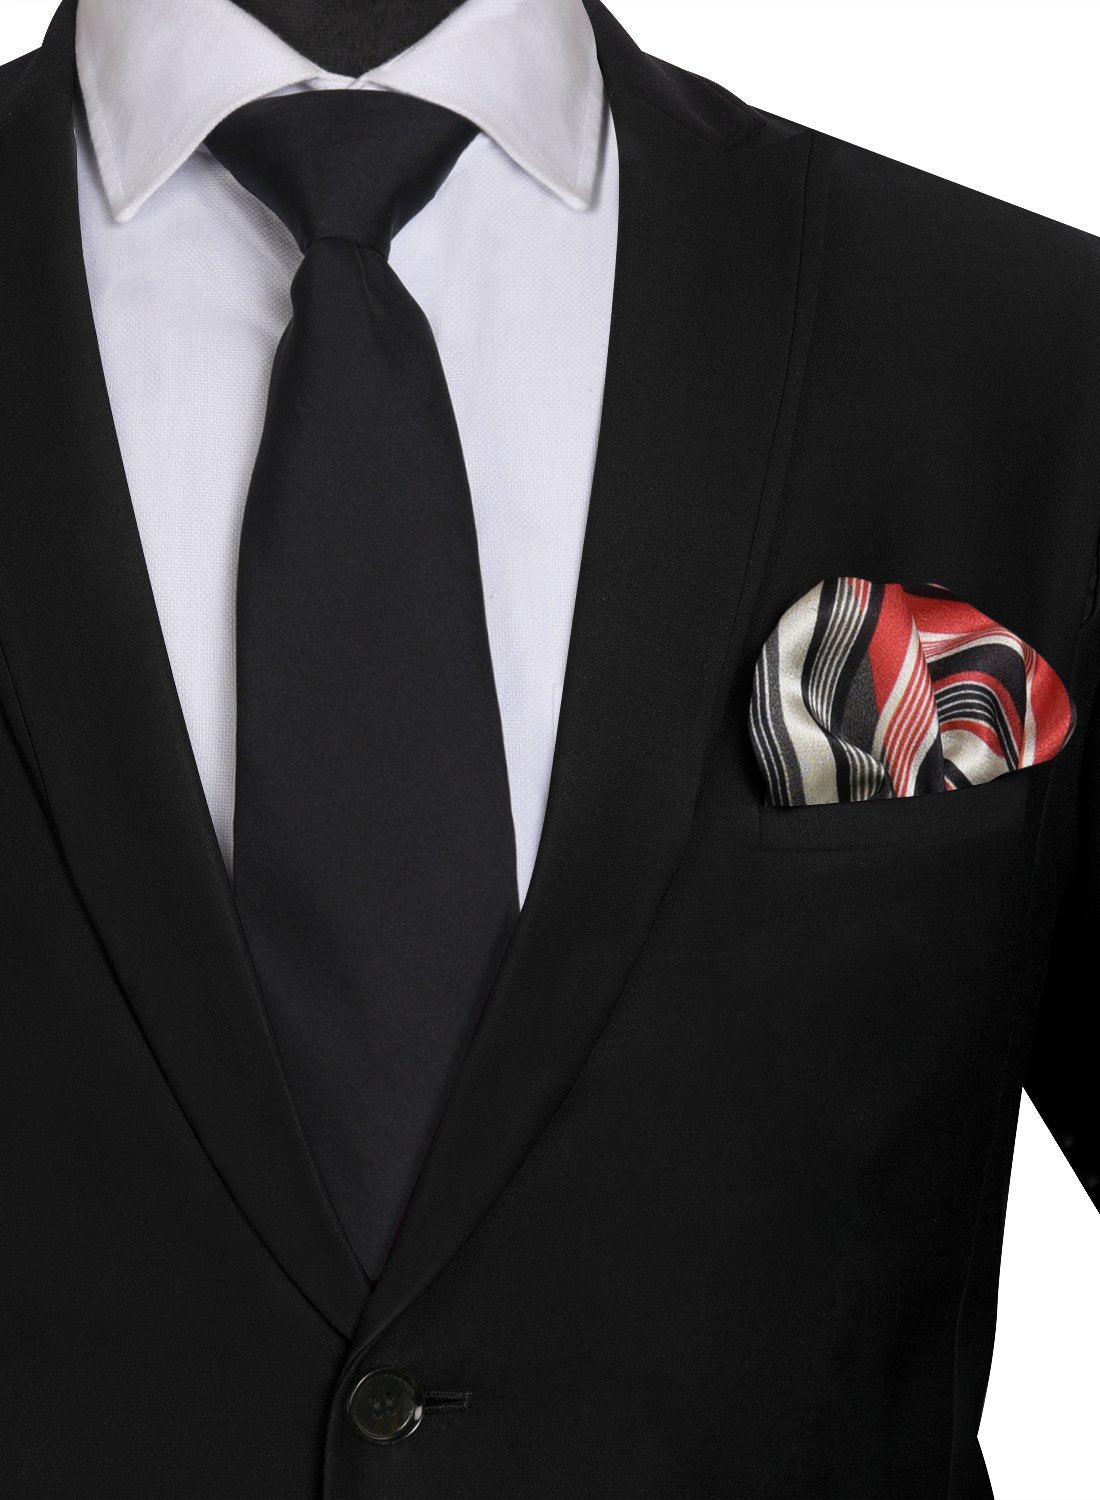 Chokore Black color Plain Silk Tie & Two-in-one Red & Black silk pocket square set